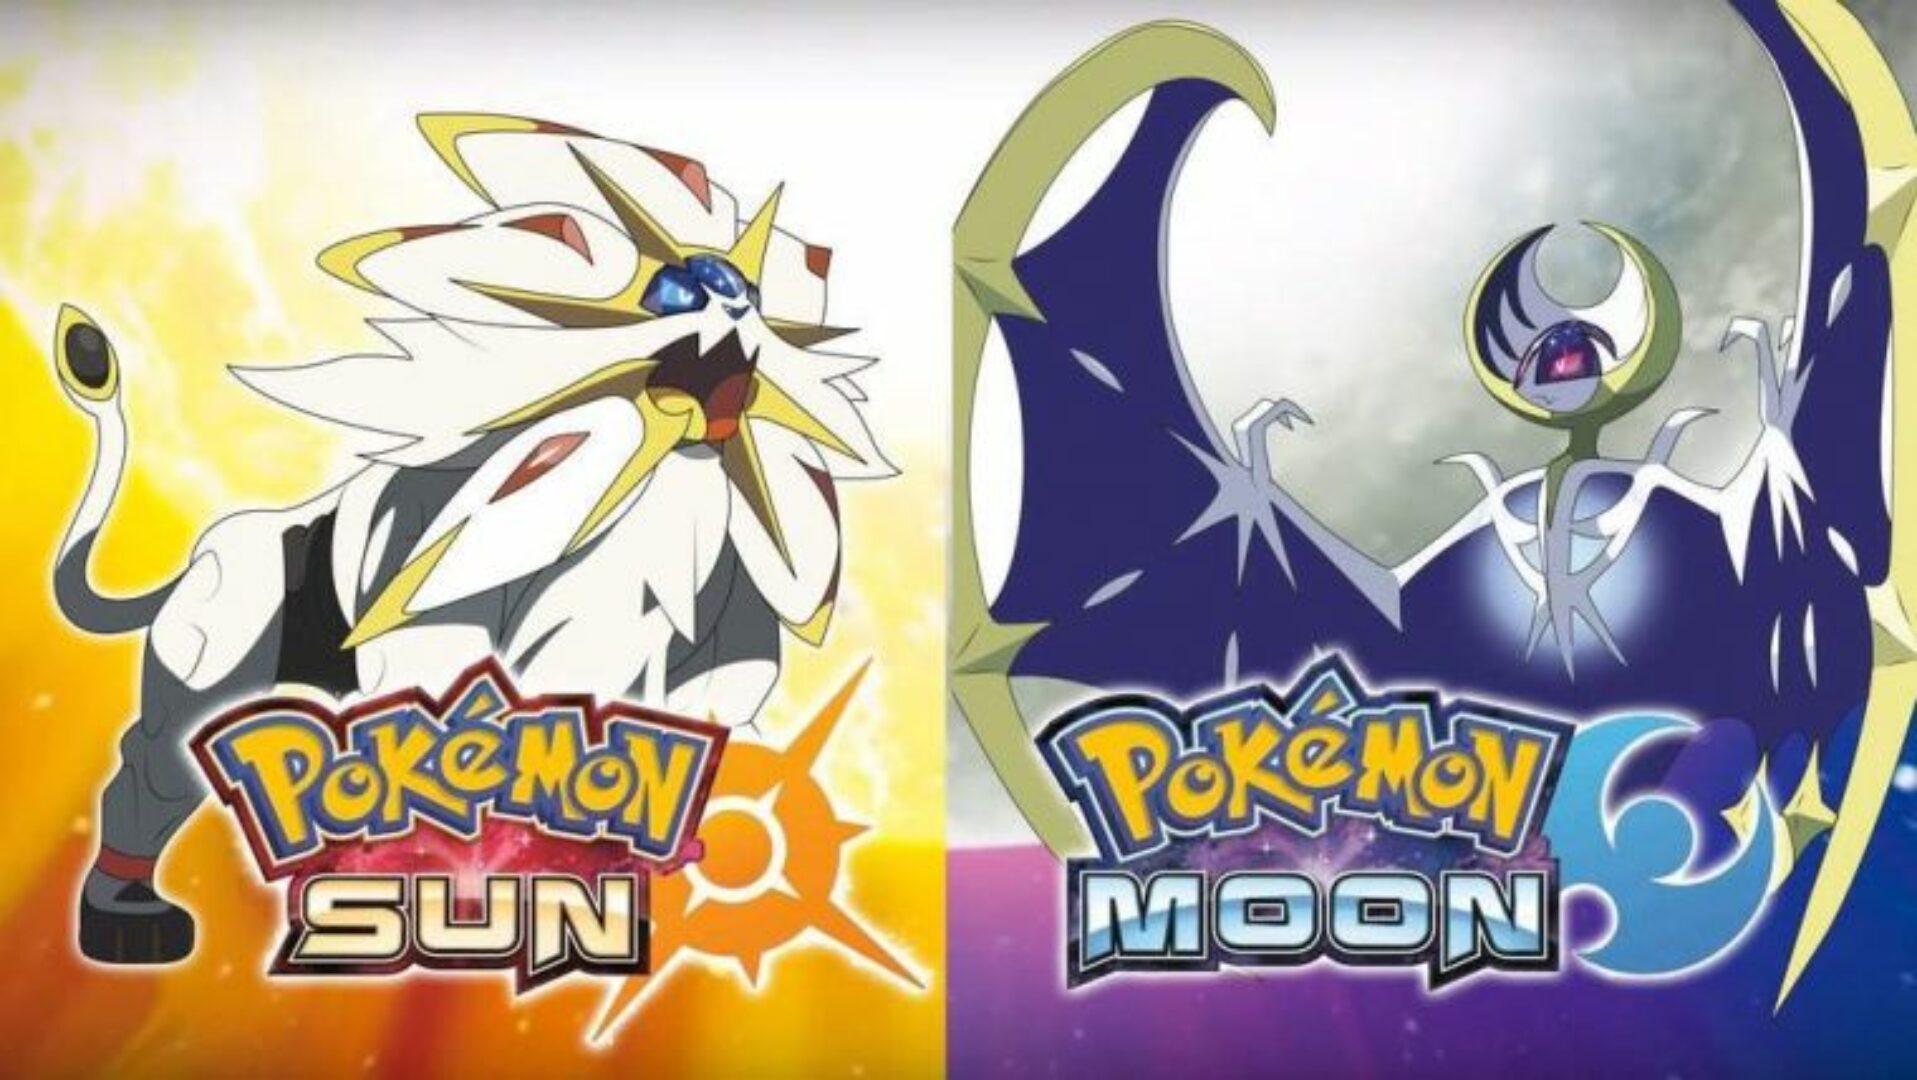 Rumor: Pokemon Sun and Moon Pokedex Potentially Leaked